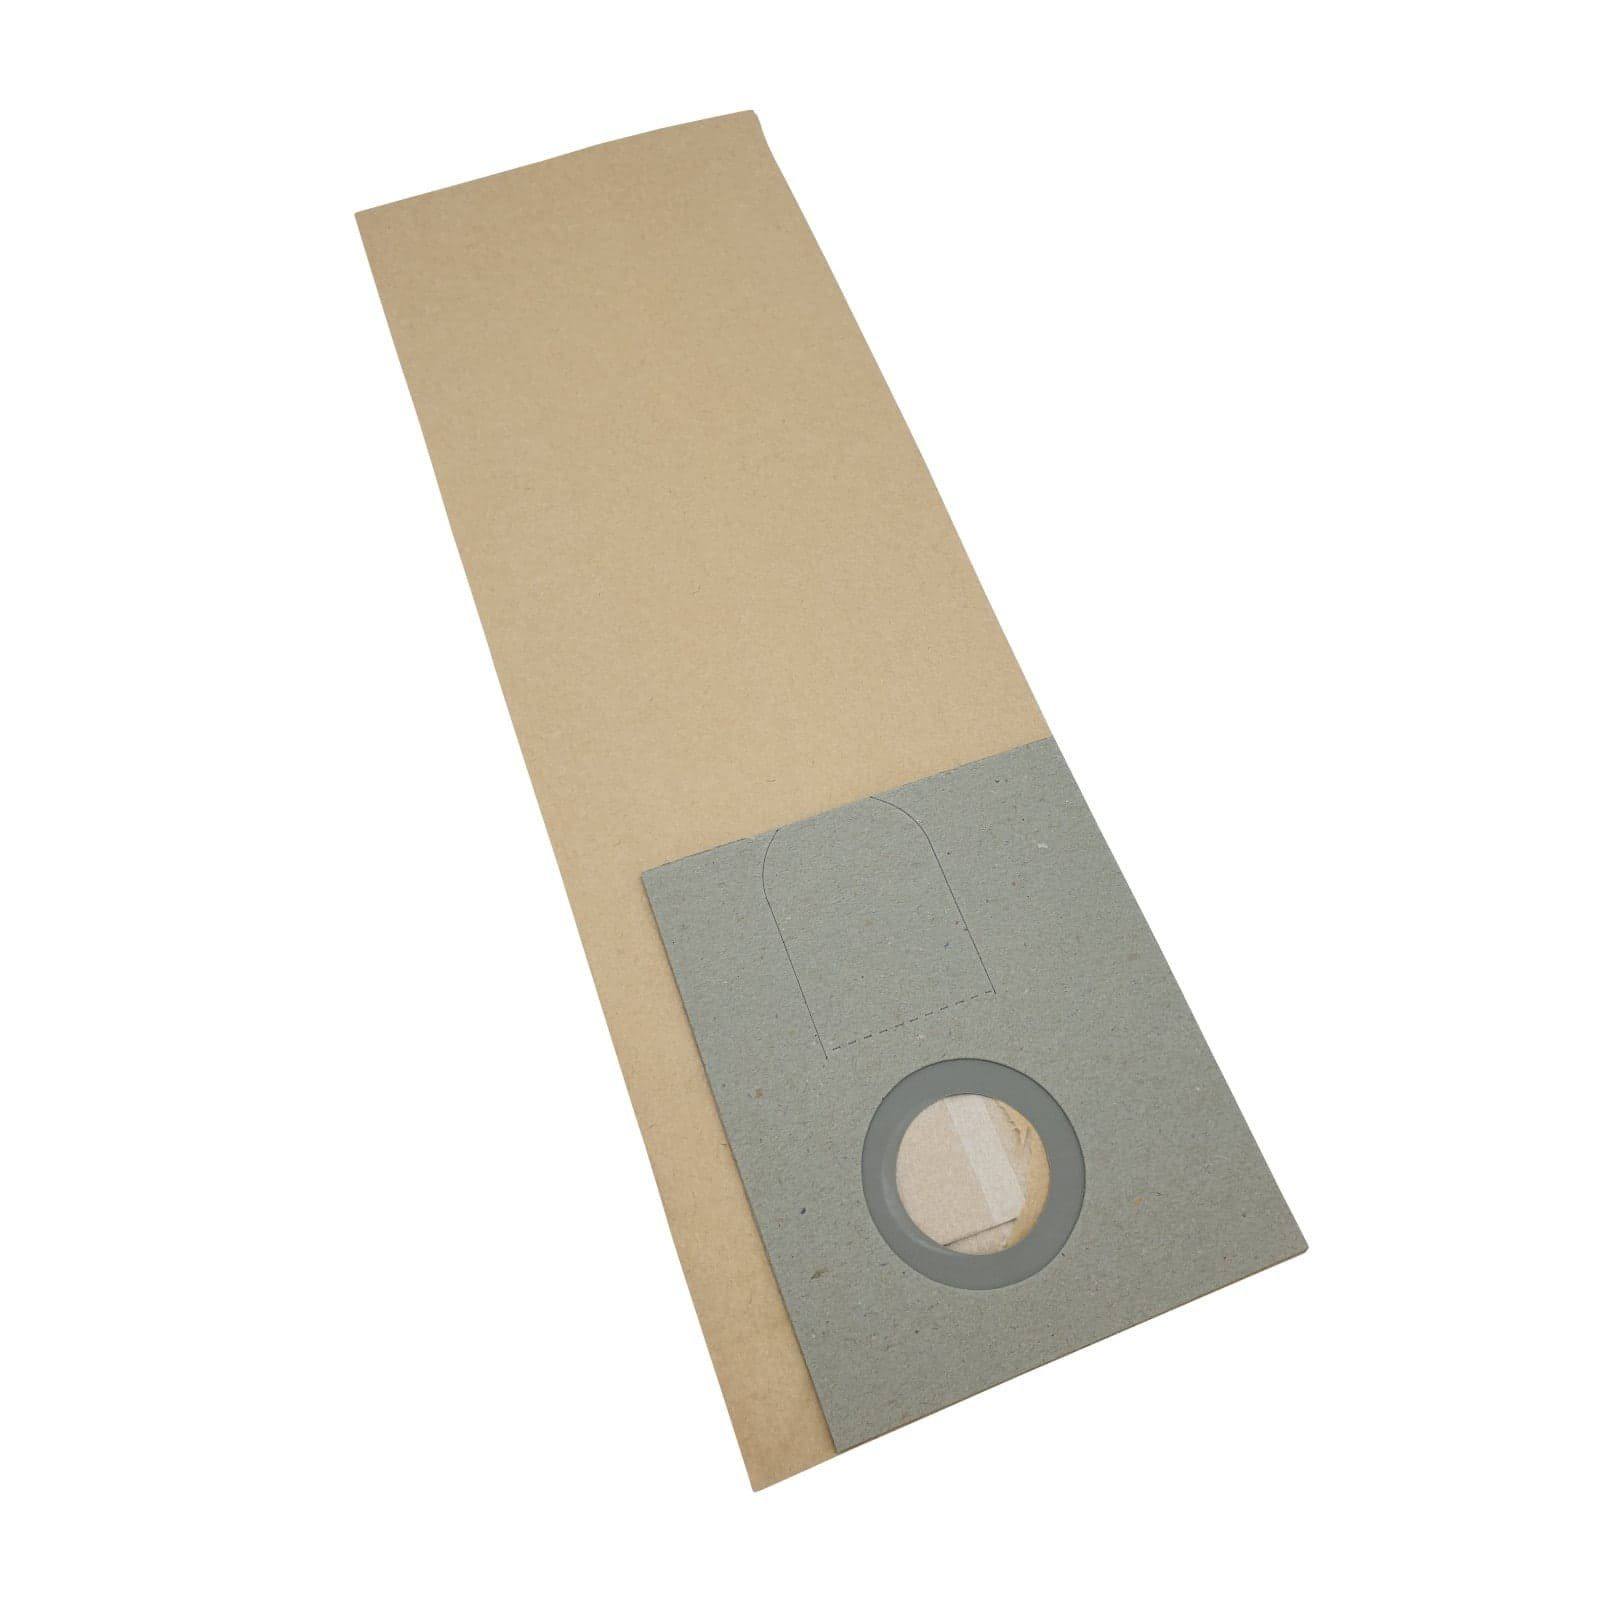 Reinica Staubsaugerbeutel für Staubbeutel UP450, Clean 10er-Pack Compacto Saugerbeutel Card la a Filtertüten Beutel passend